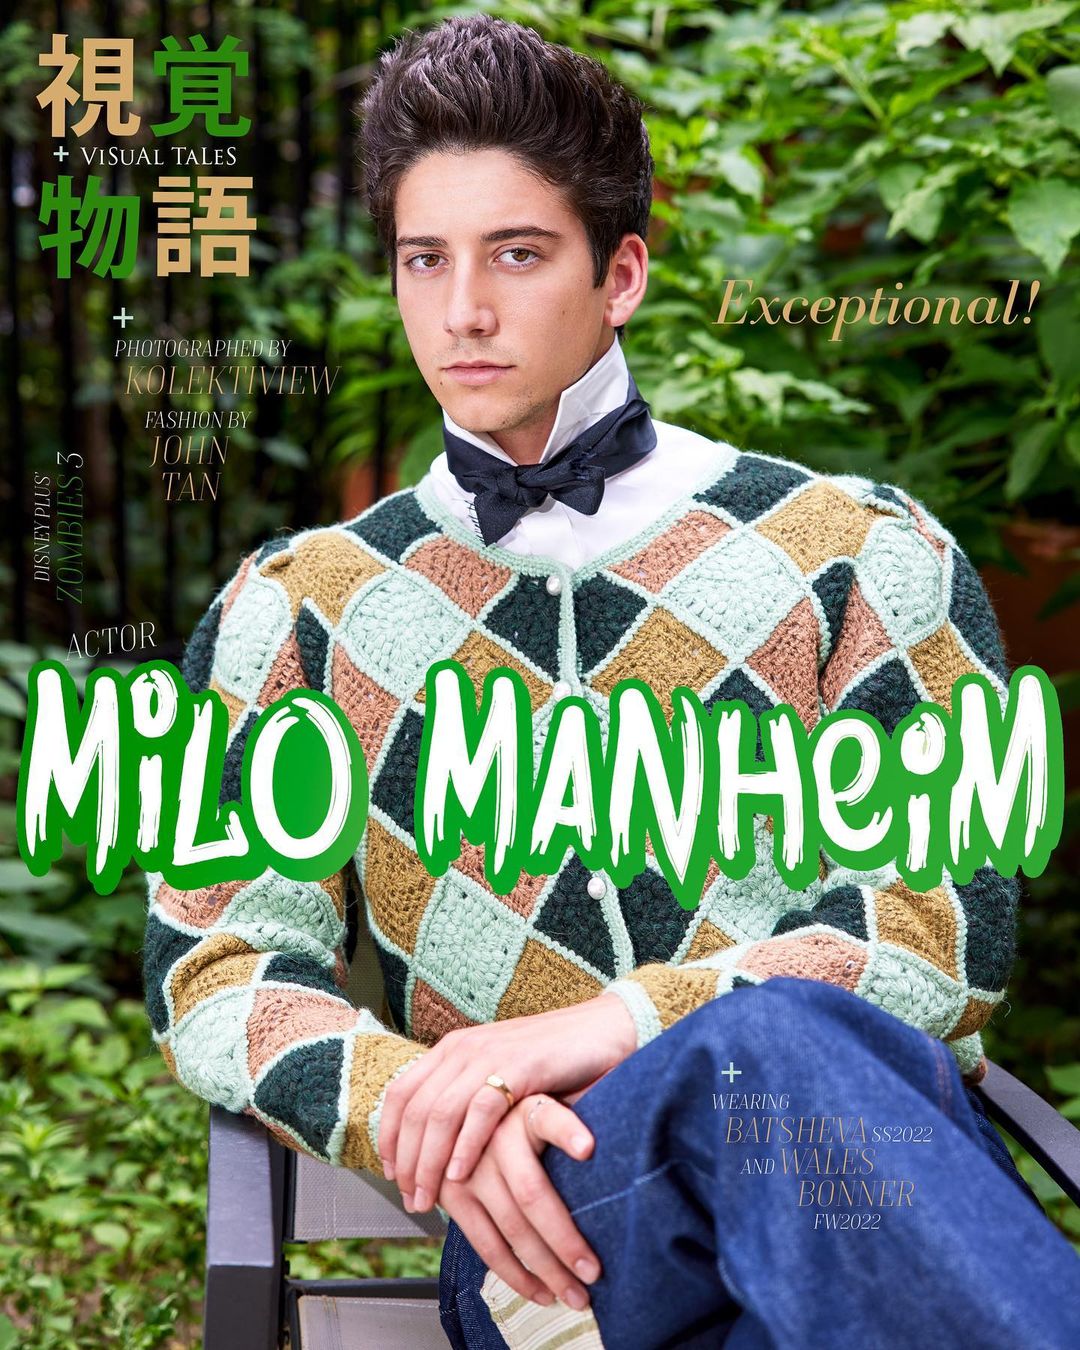 General photo of Milo Manheim